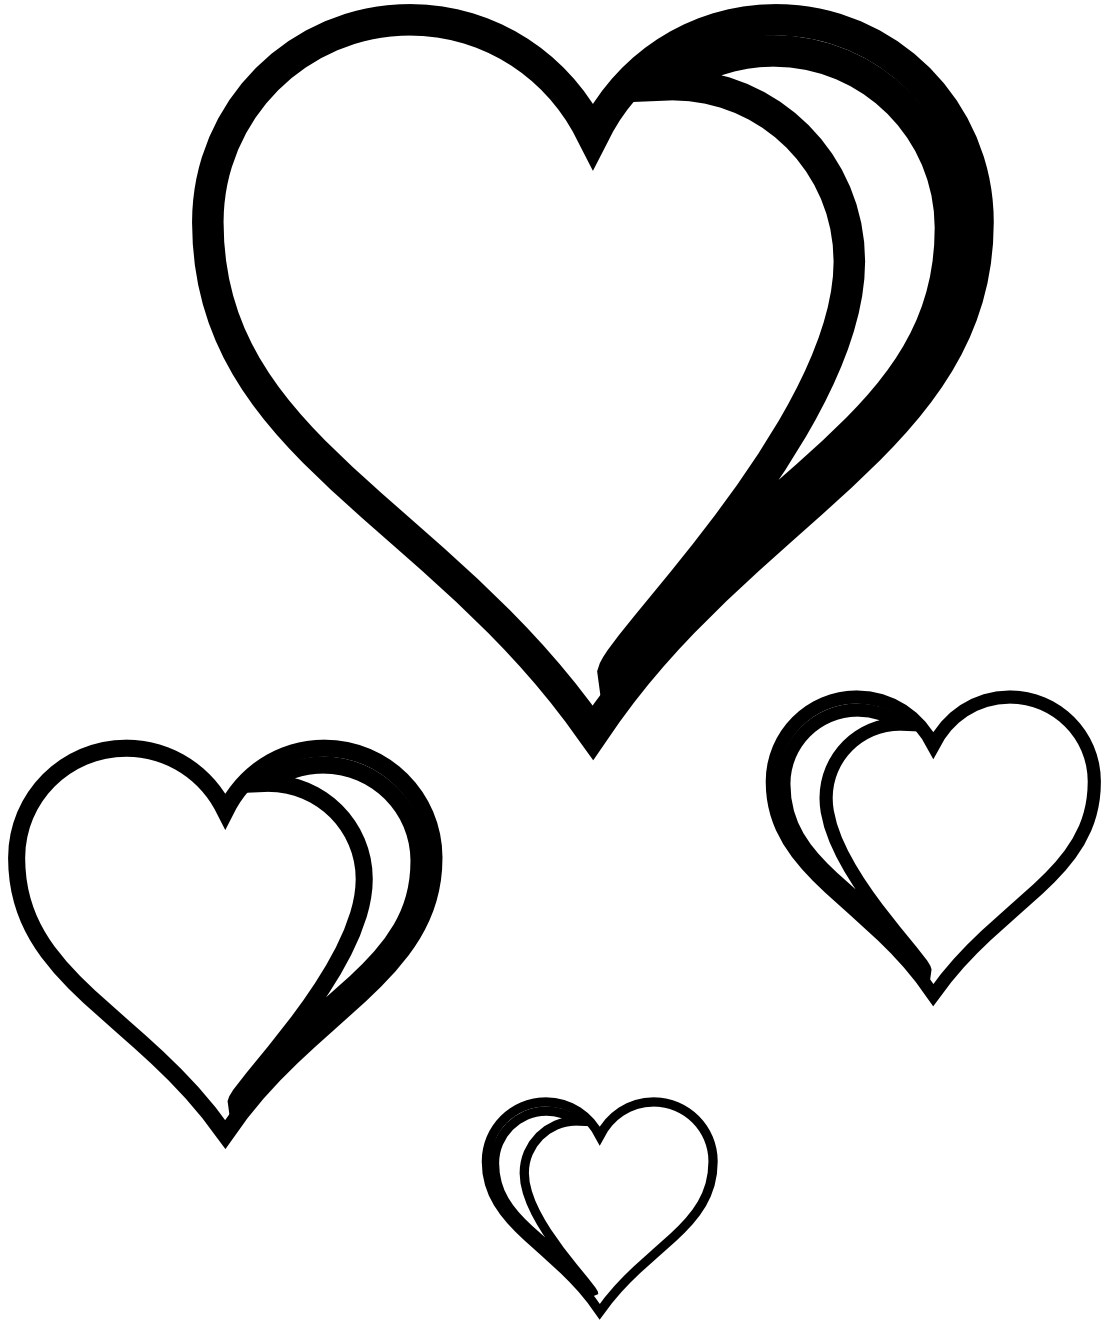 Black and white hearts clip art